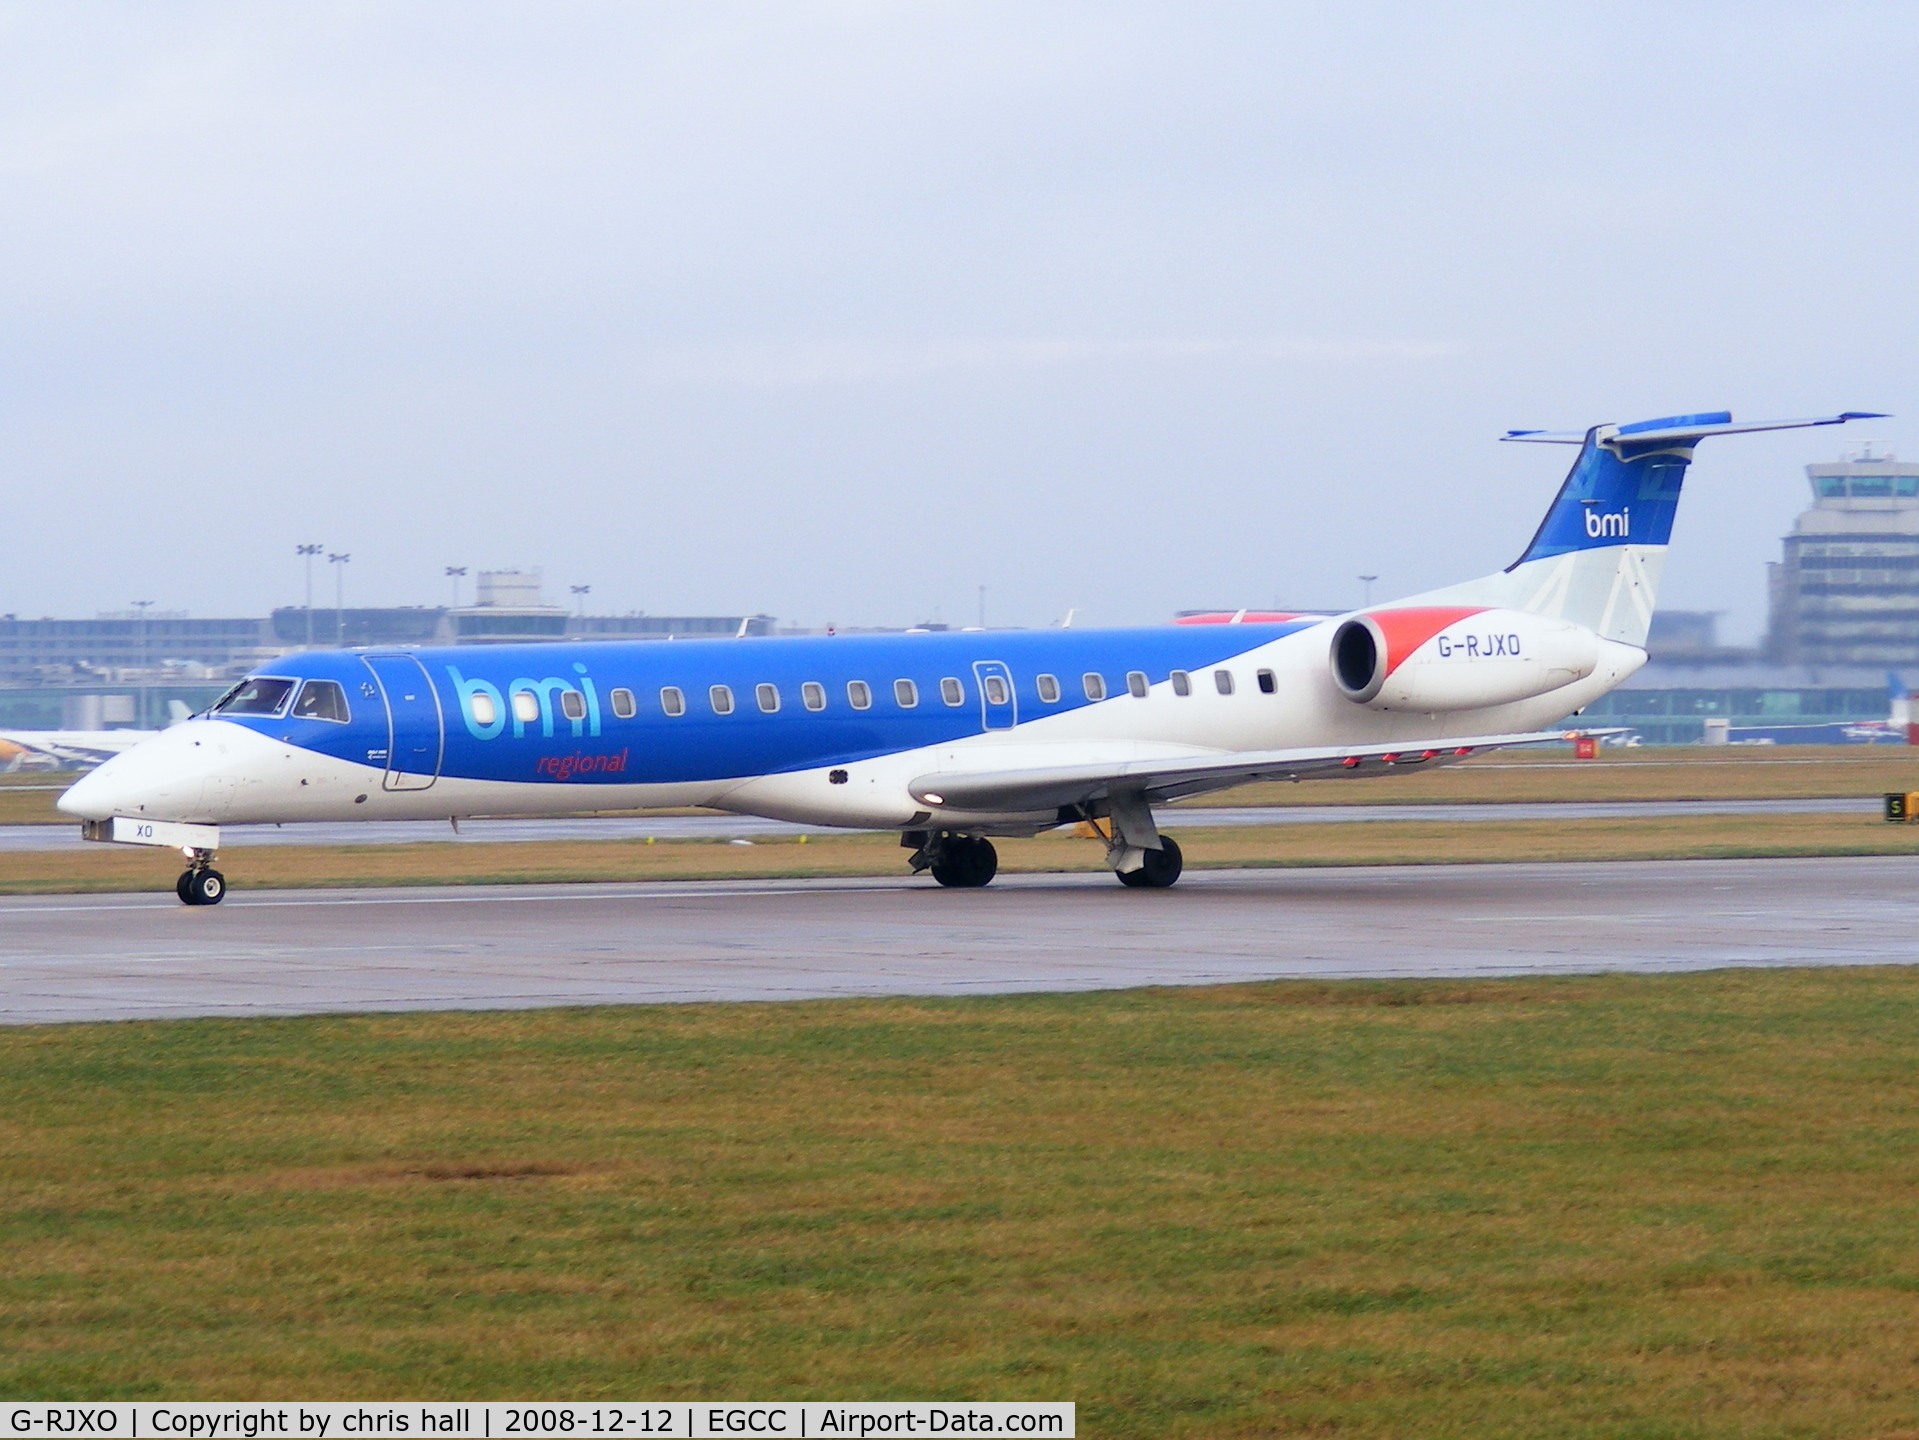 G-RJXO, 2000 Embraer ERJ-145MP (EMB-145MP) C/N 145339, BMI Regional